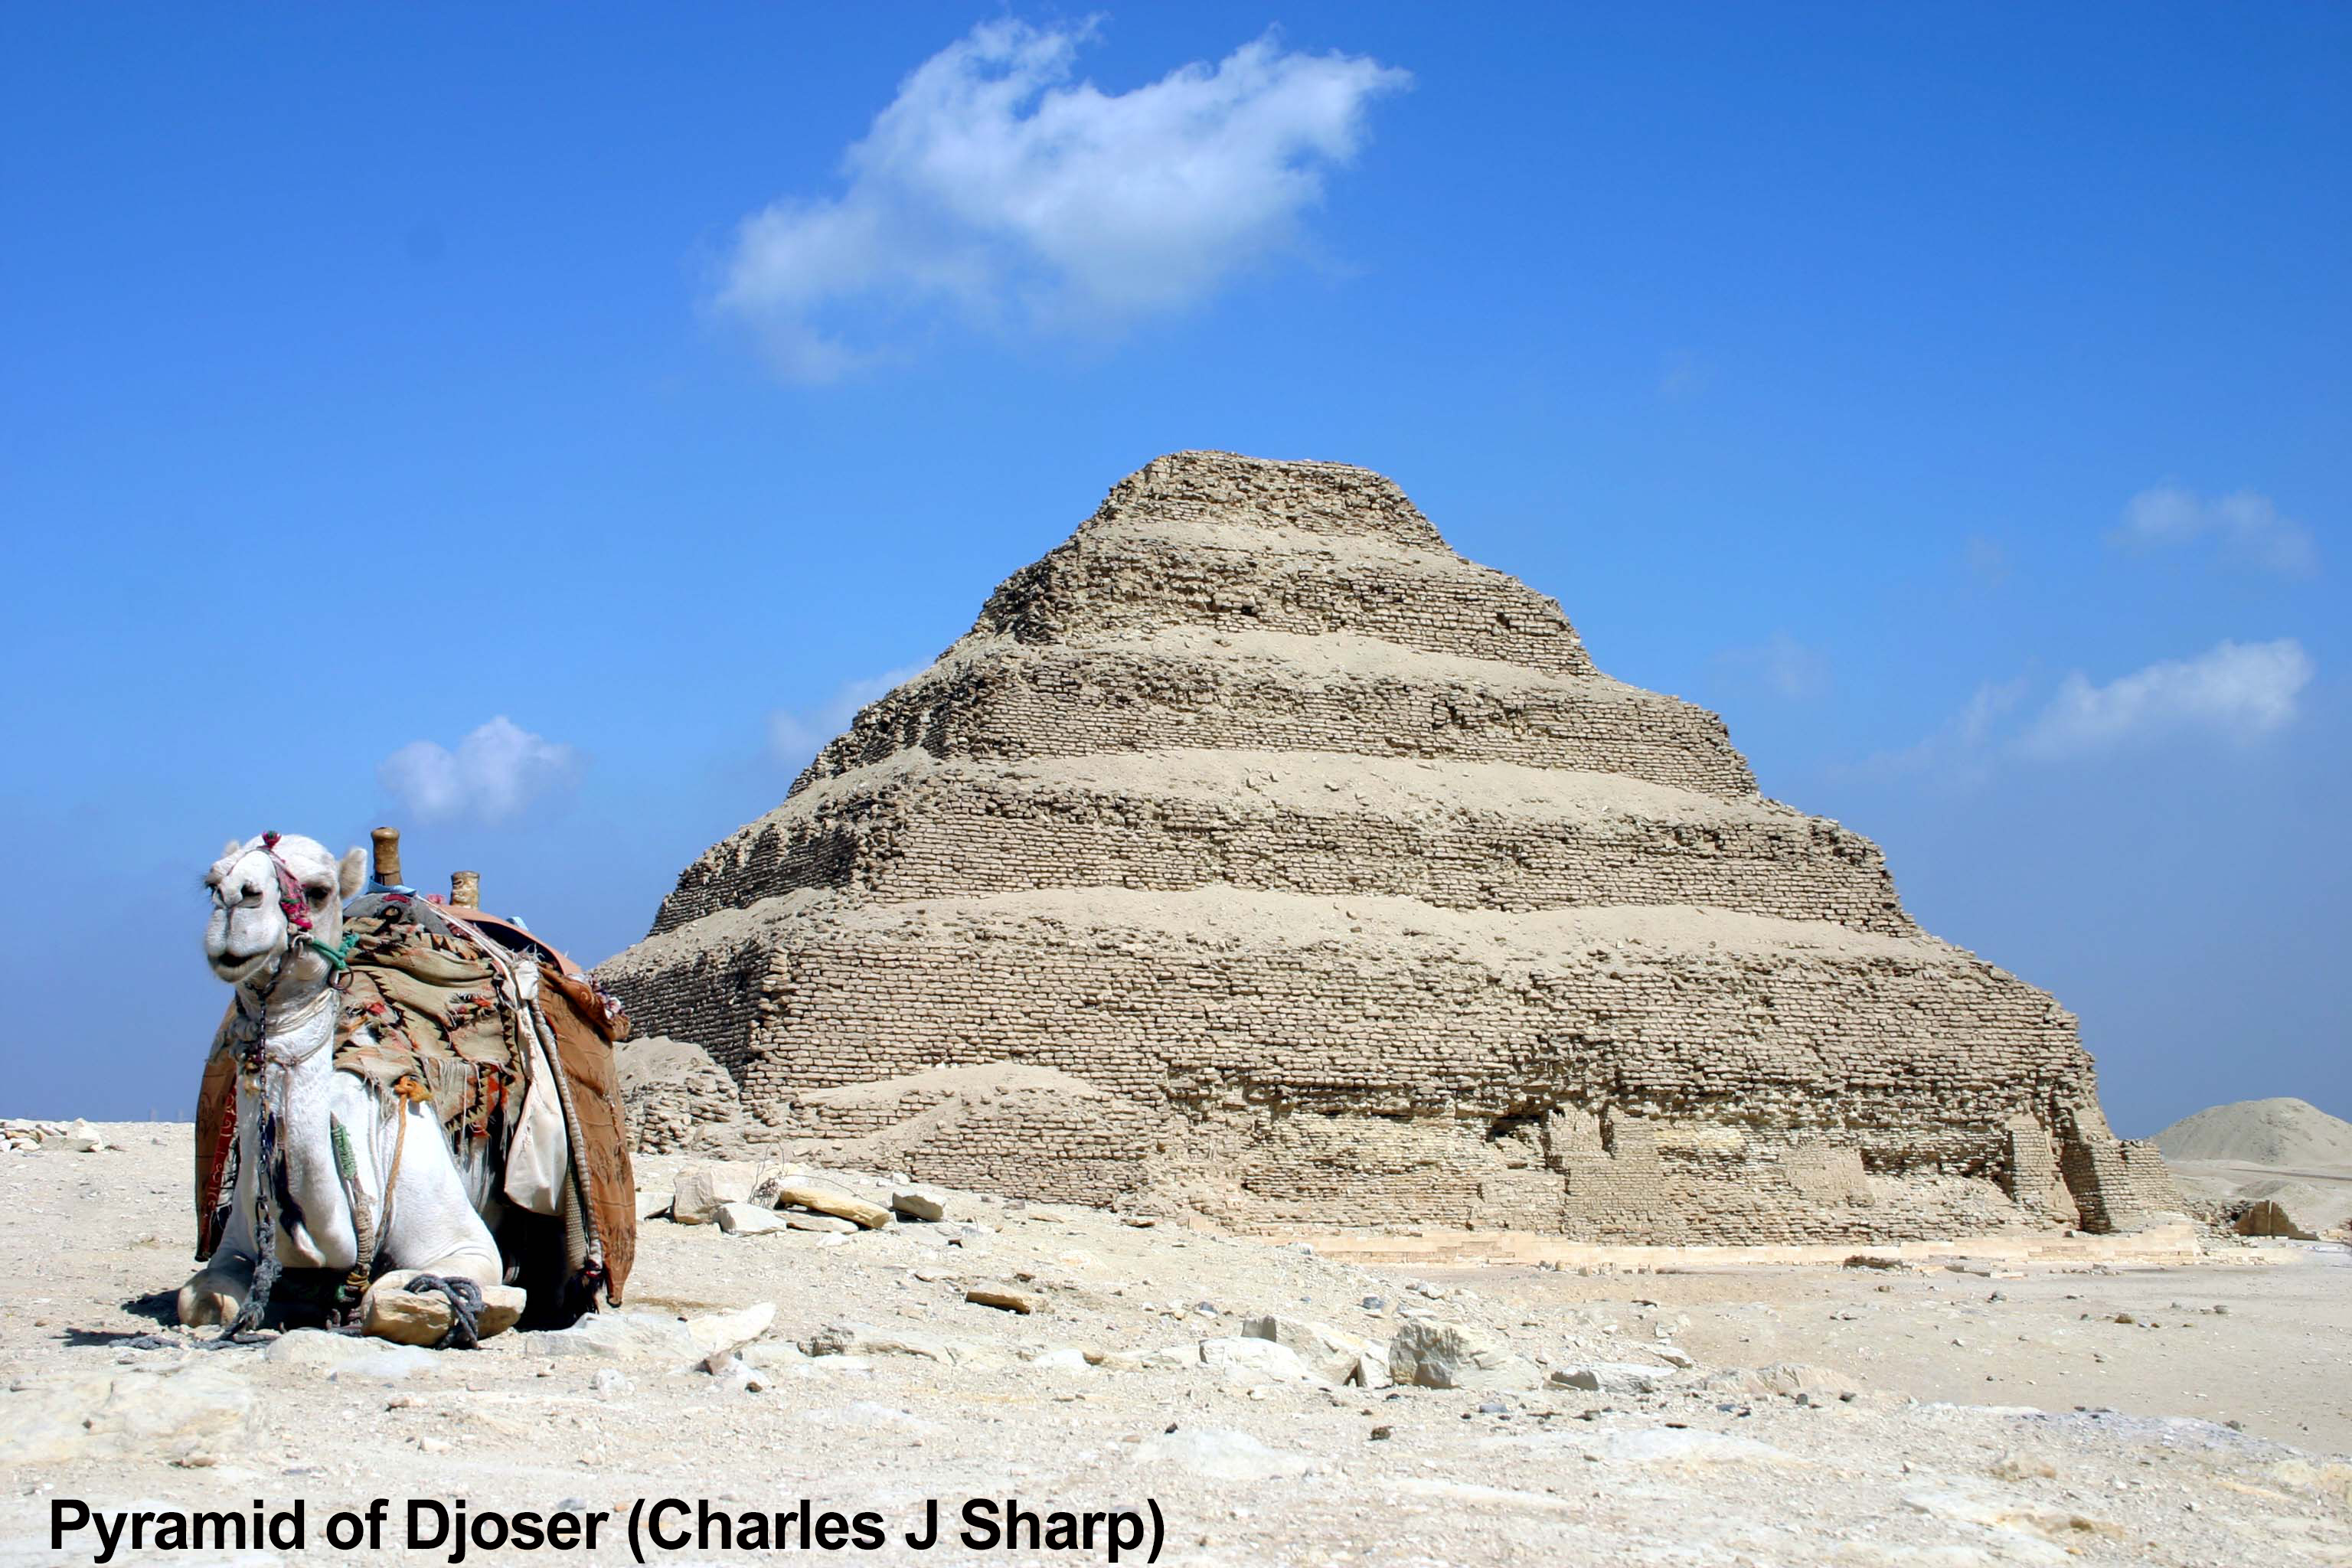 Pyramid of Djoser (credit to Charles J Sharp)